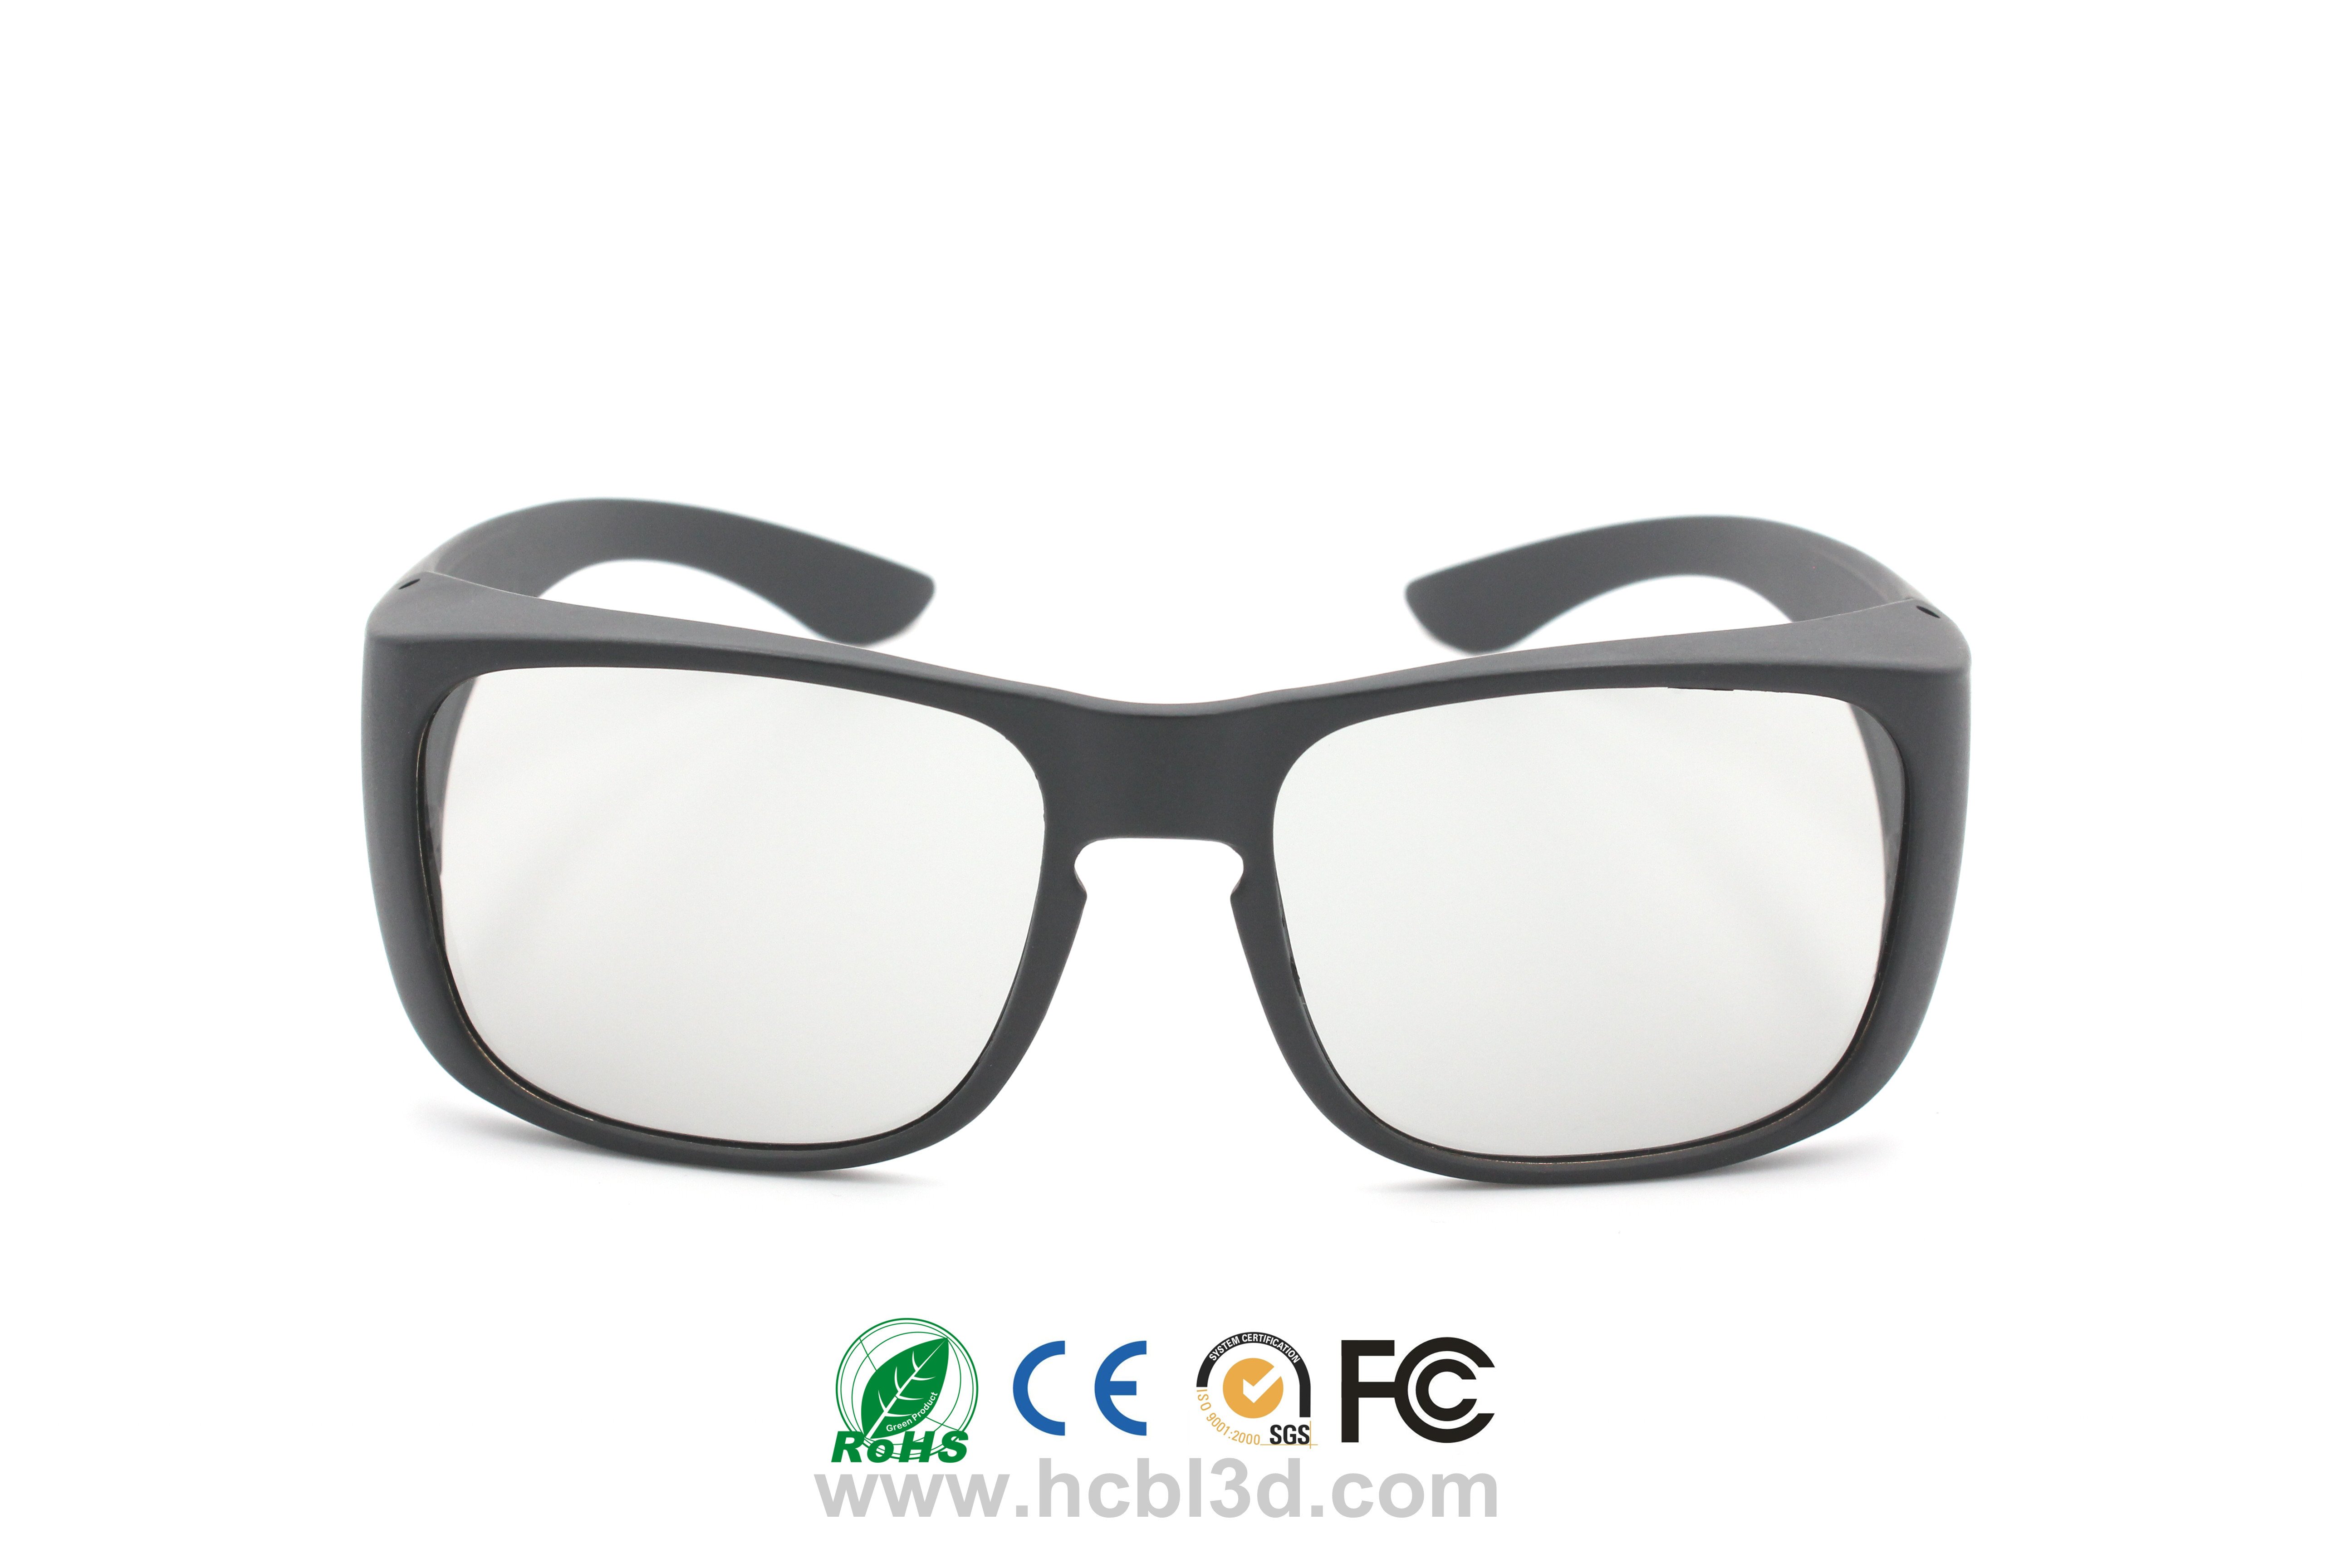 3D glasses with big frame, Caravan Type, Wide Field of Vision For Digital 3D Cinemas